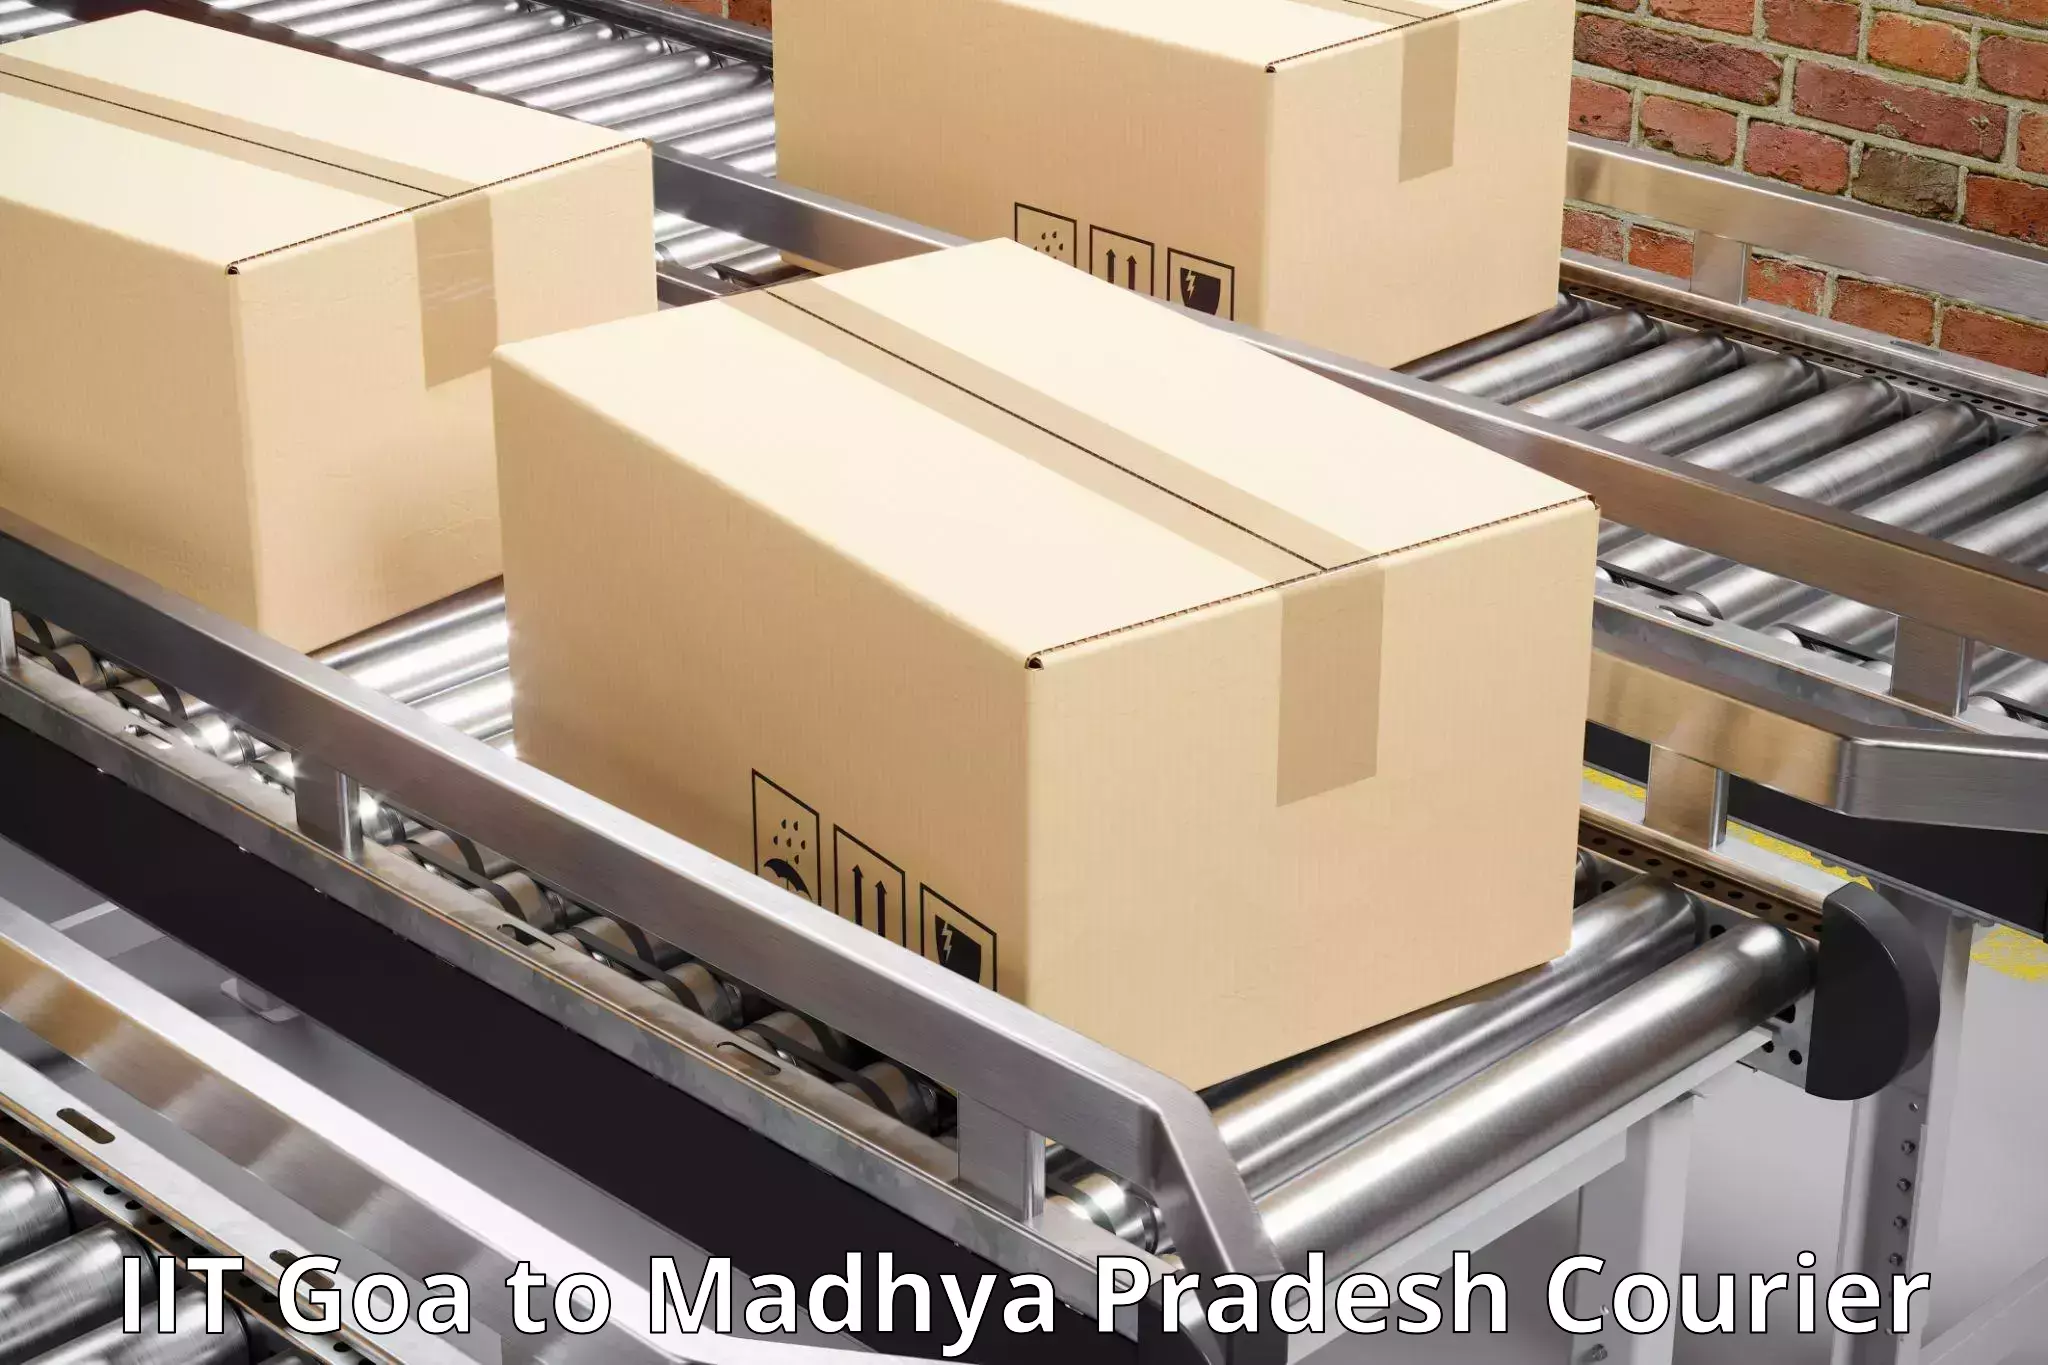 Courier service comparison IIT Goa to Chand Chaurai